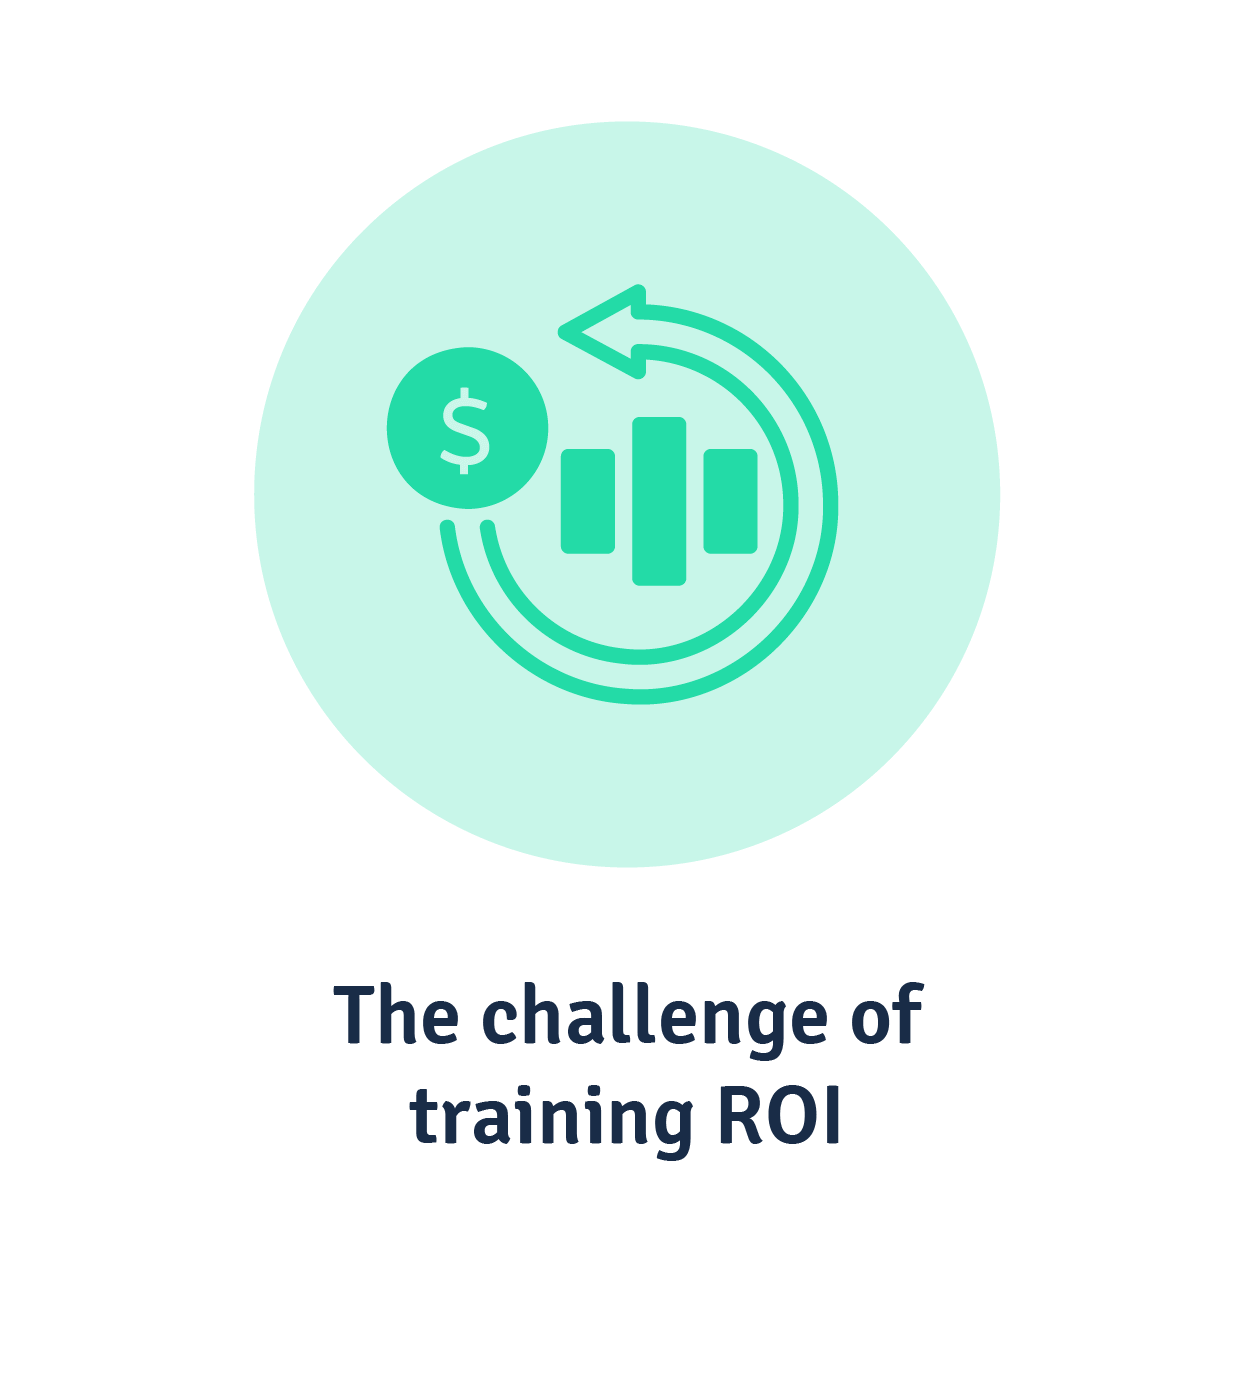 The challenge of training ROI